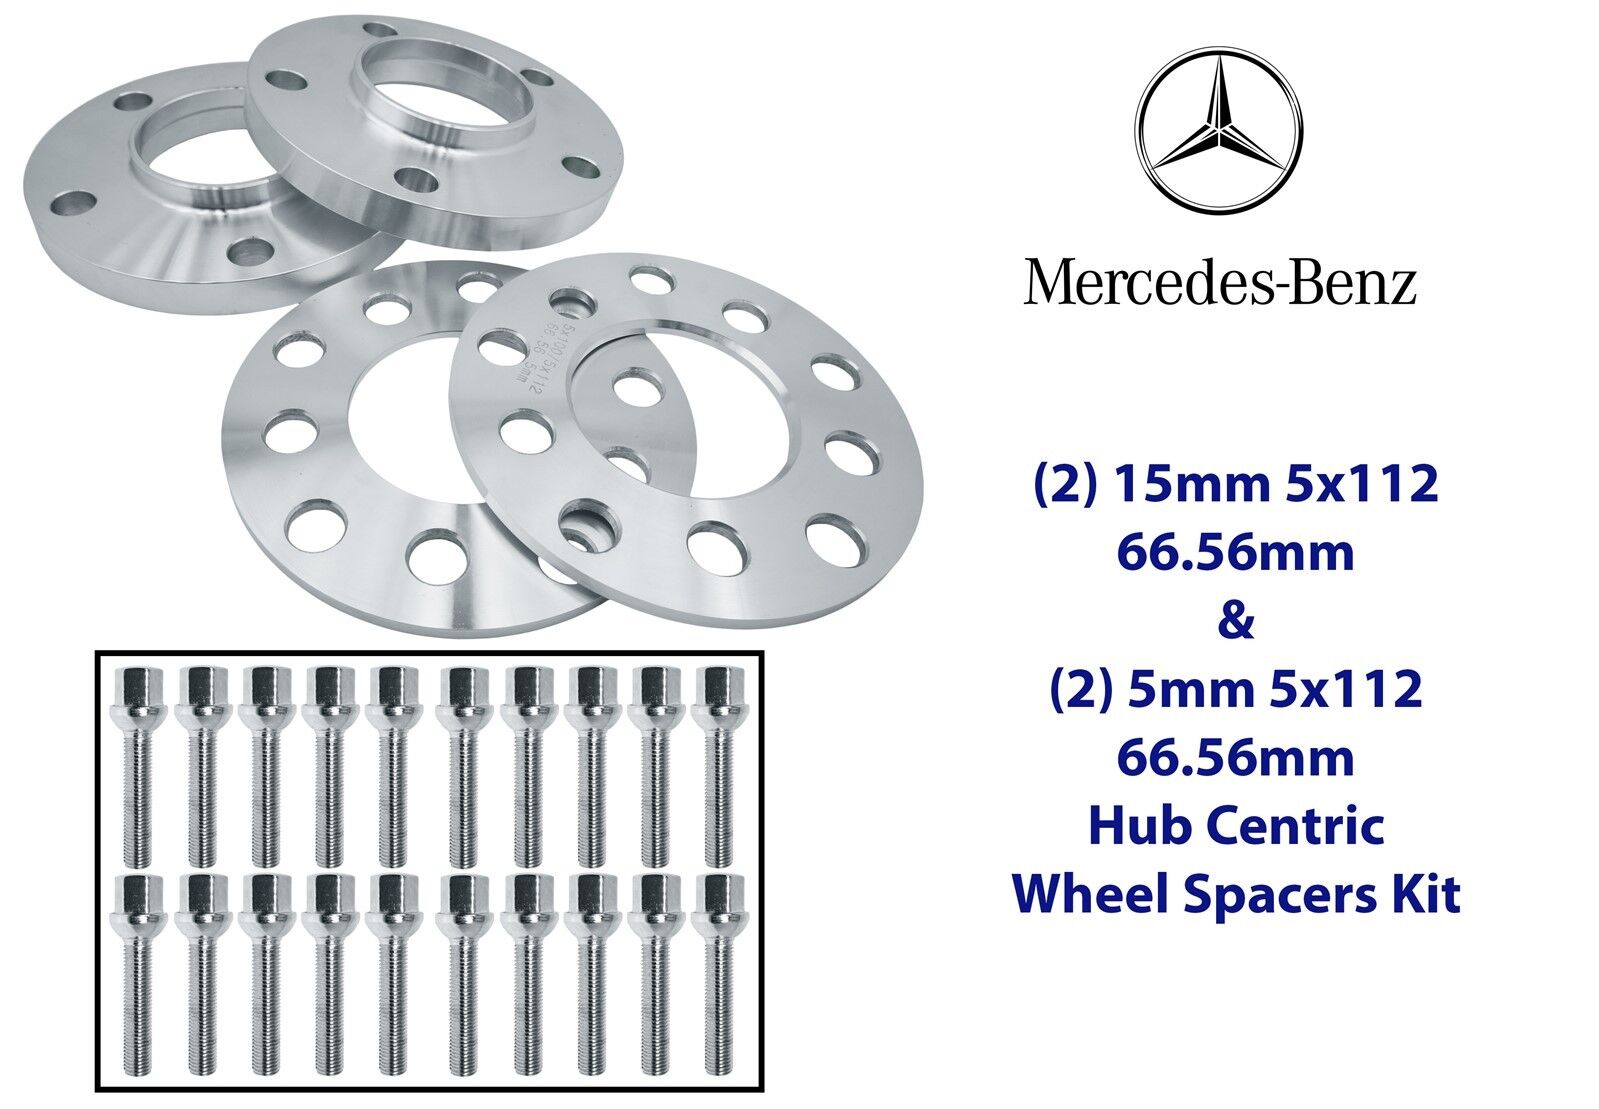 Mercedes Benz Wheel Spacers Kit 5x112 (2) 5mm & (2) 15mm Fits: W203 W209 W210 